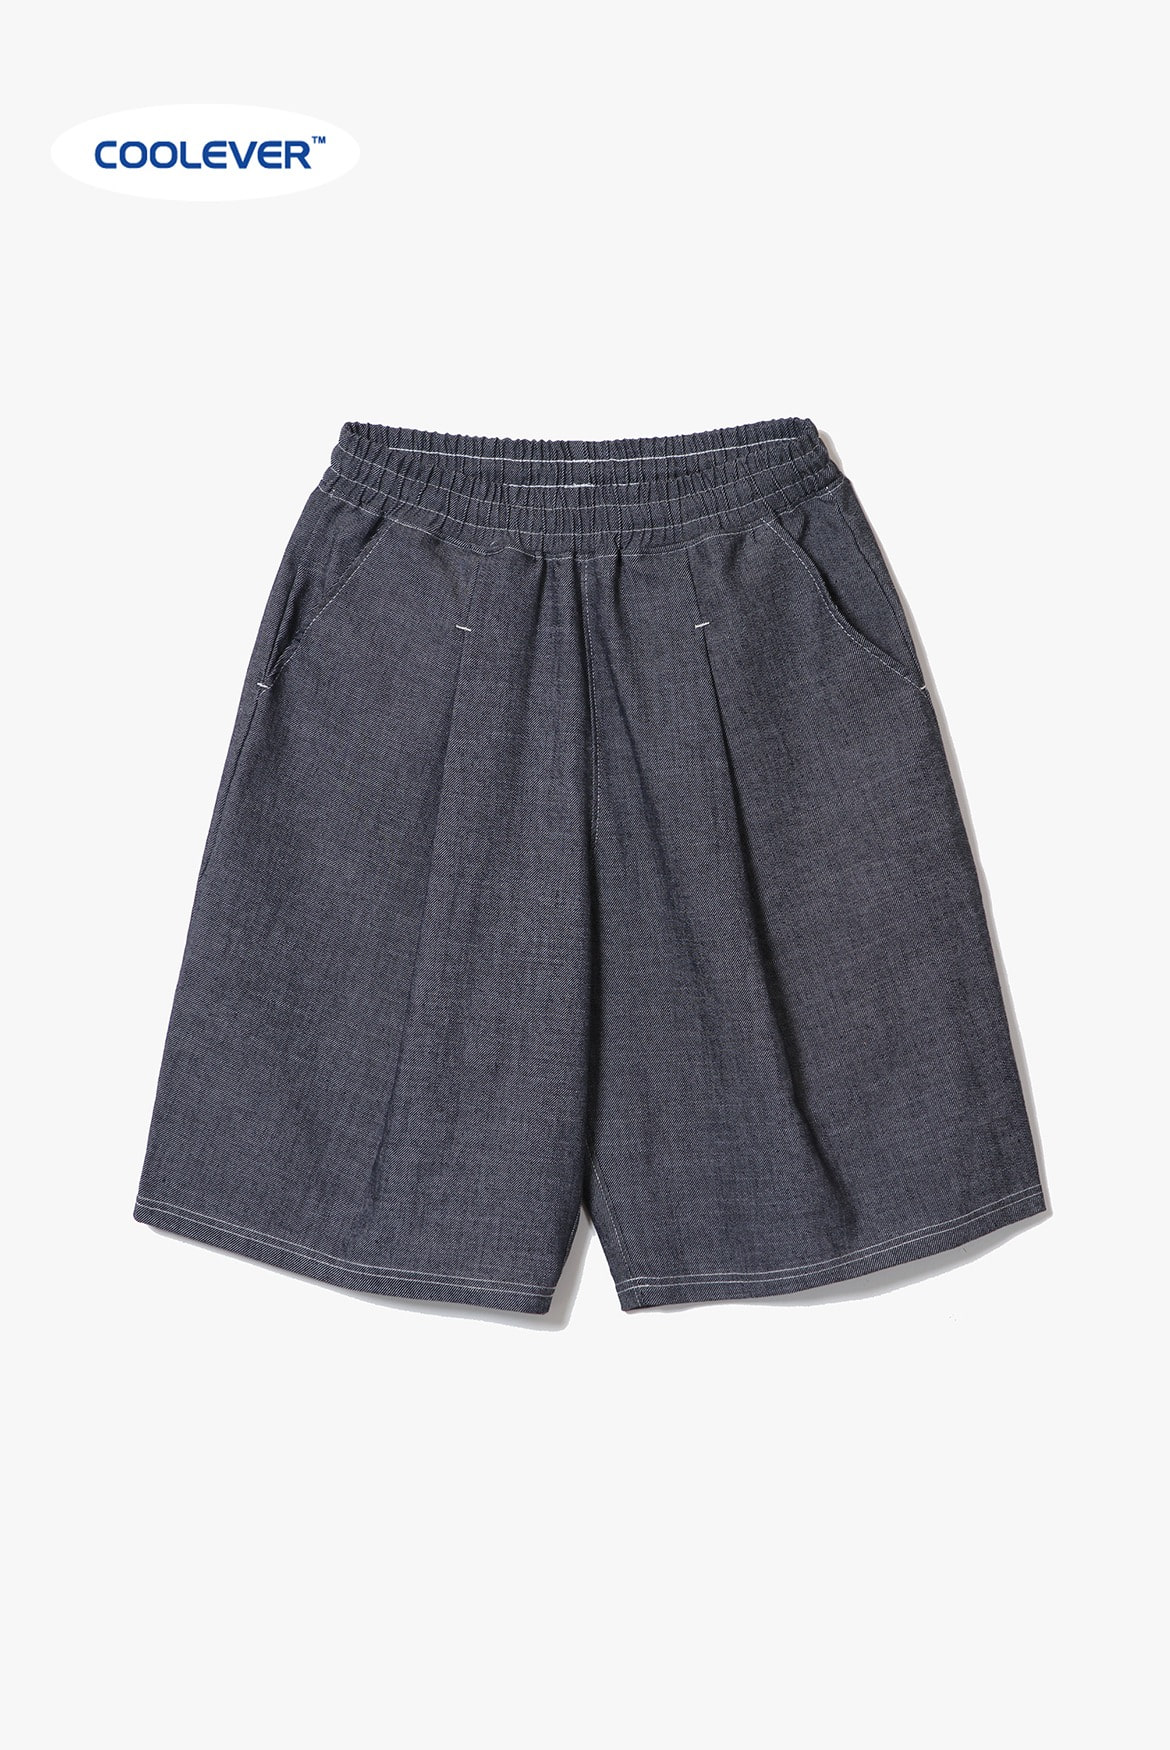 Clean Coolever Tuck Banding Shorts [Indigo]